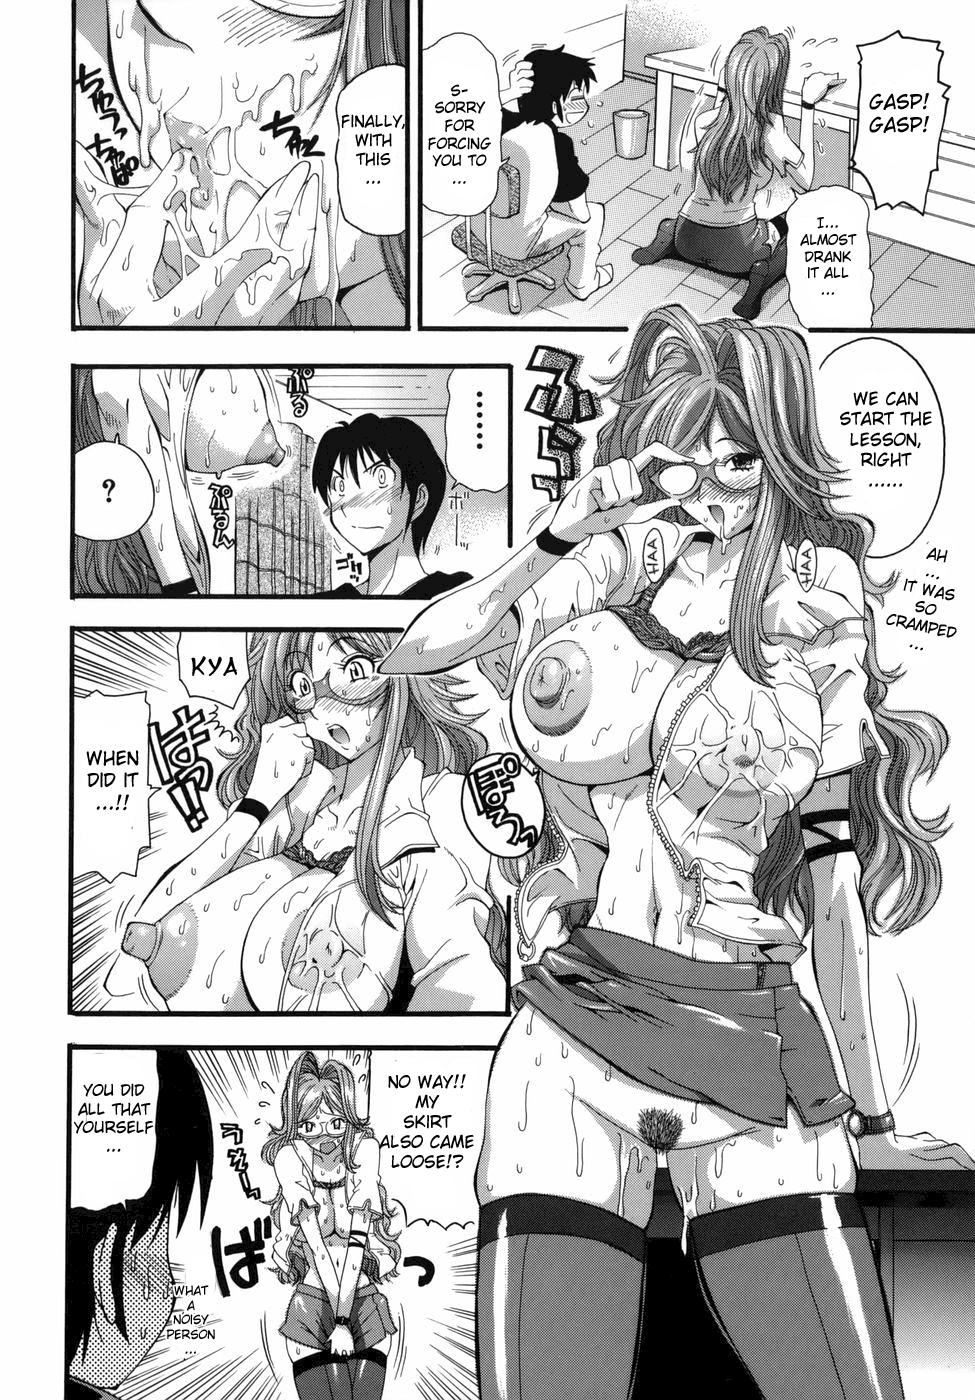 Topless One More Lesson, Haruka-sensei Best Blowjob - Page 10